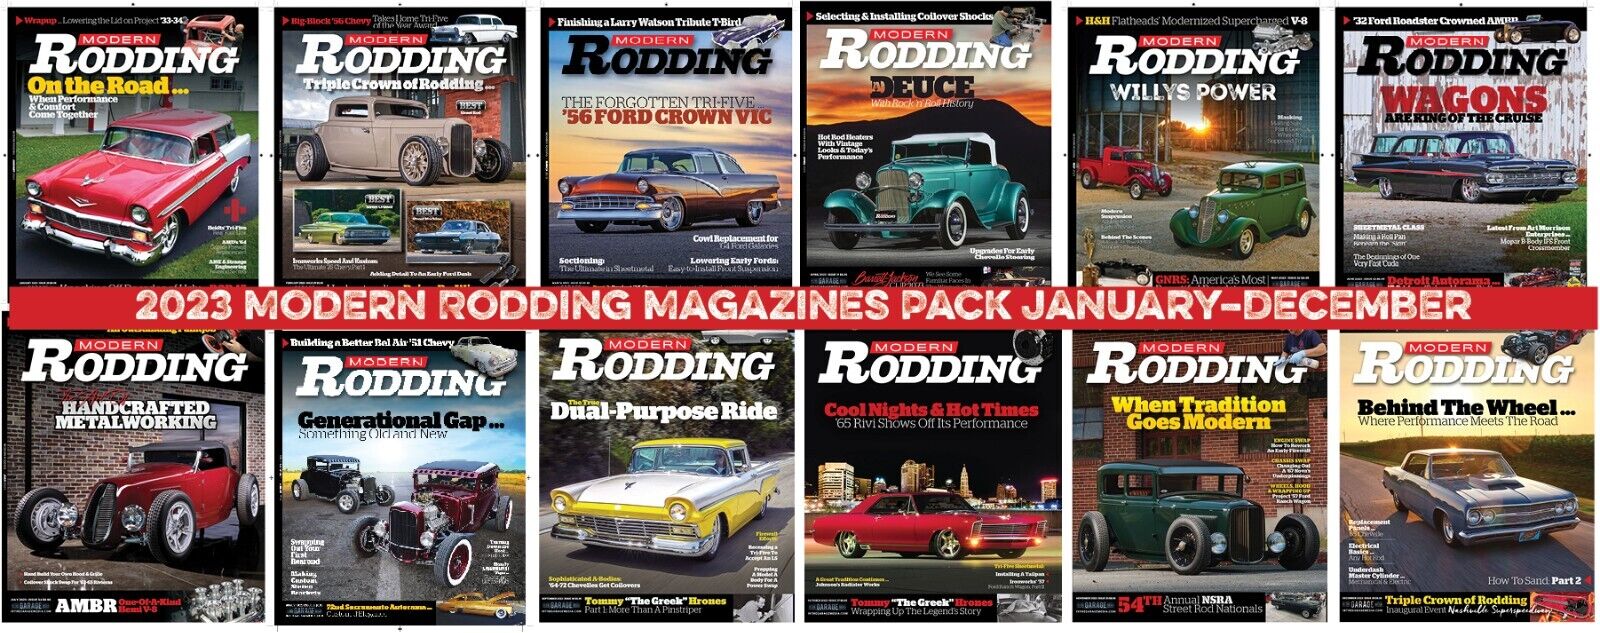 Modern Rodding Magazine January - December 2023 Pack of all 12 issues